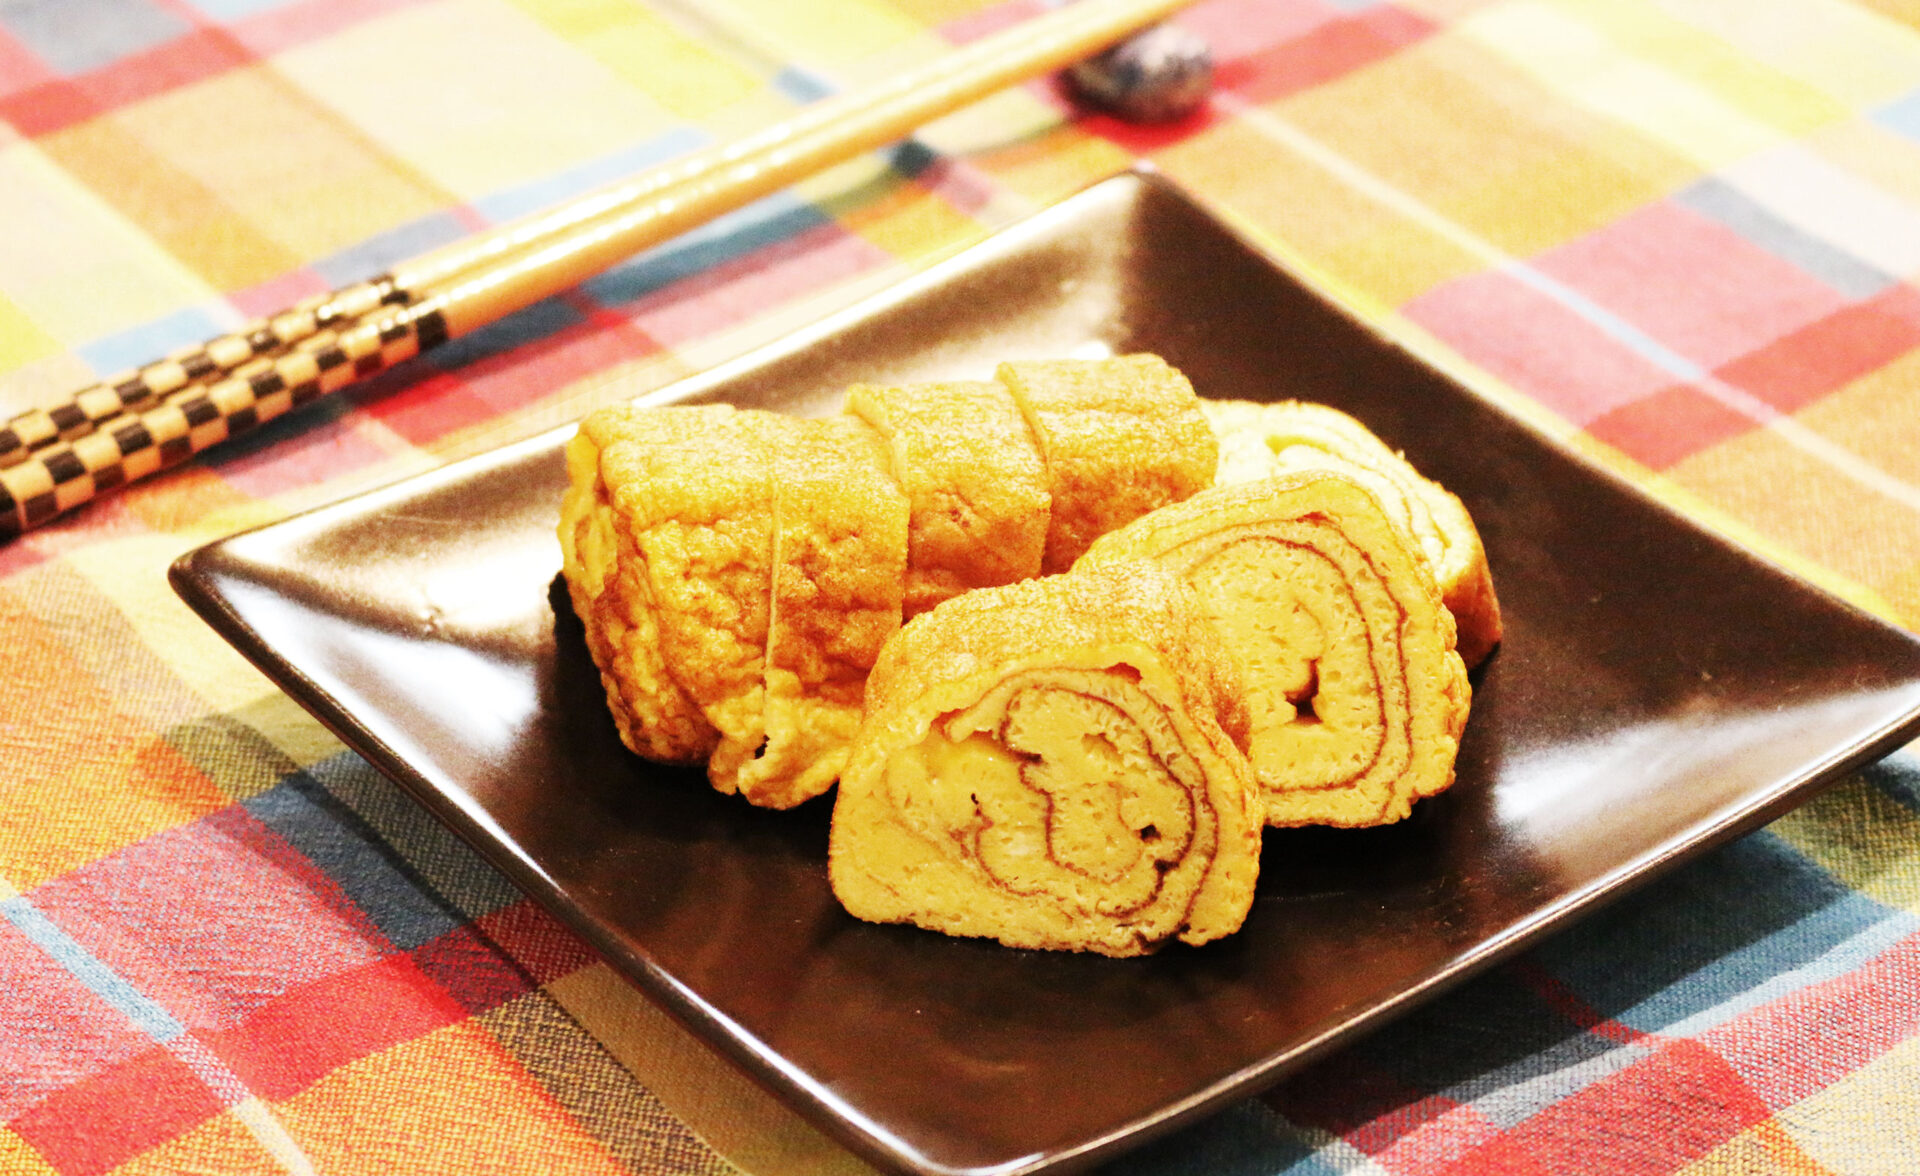 Let’s make Tamagoyaki japanese “Tamagoyaki” recipe